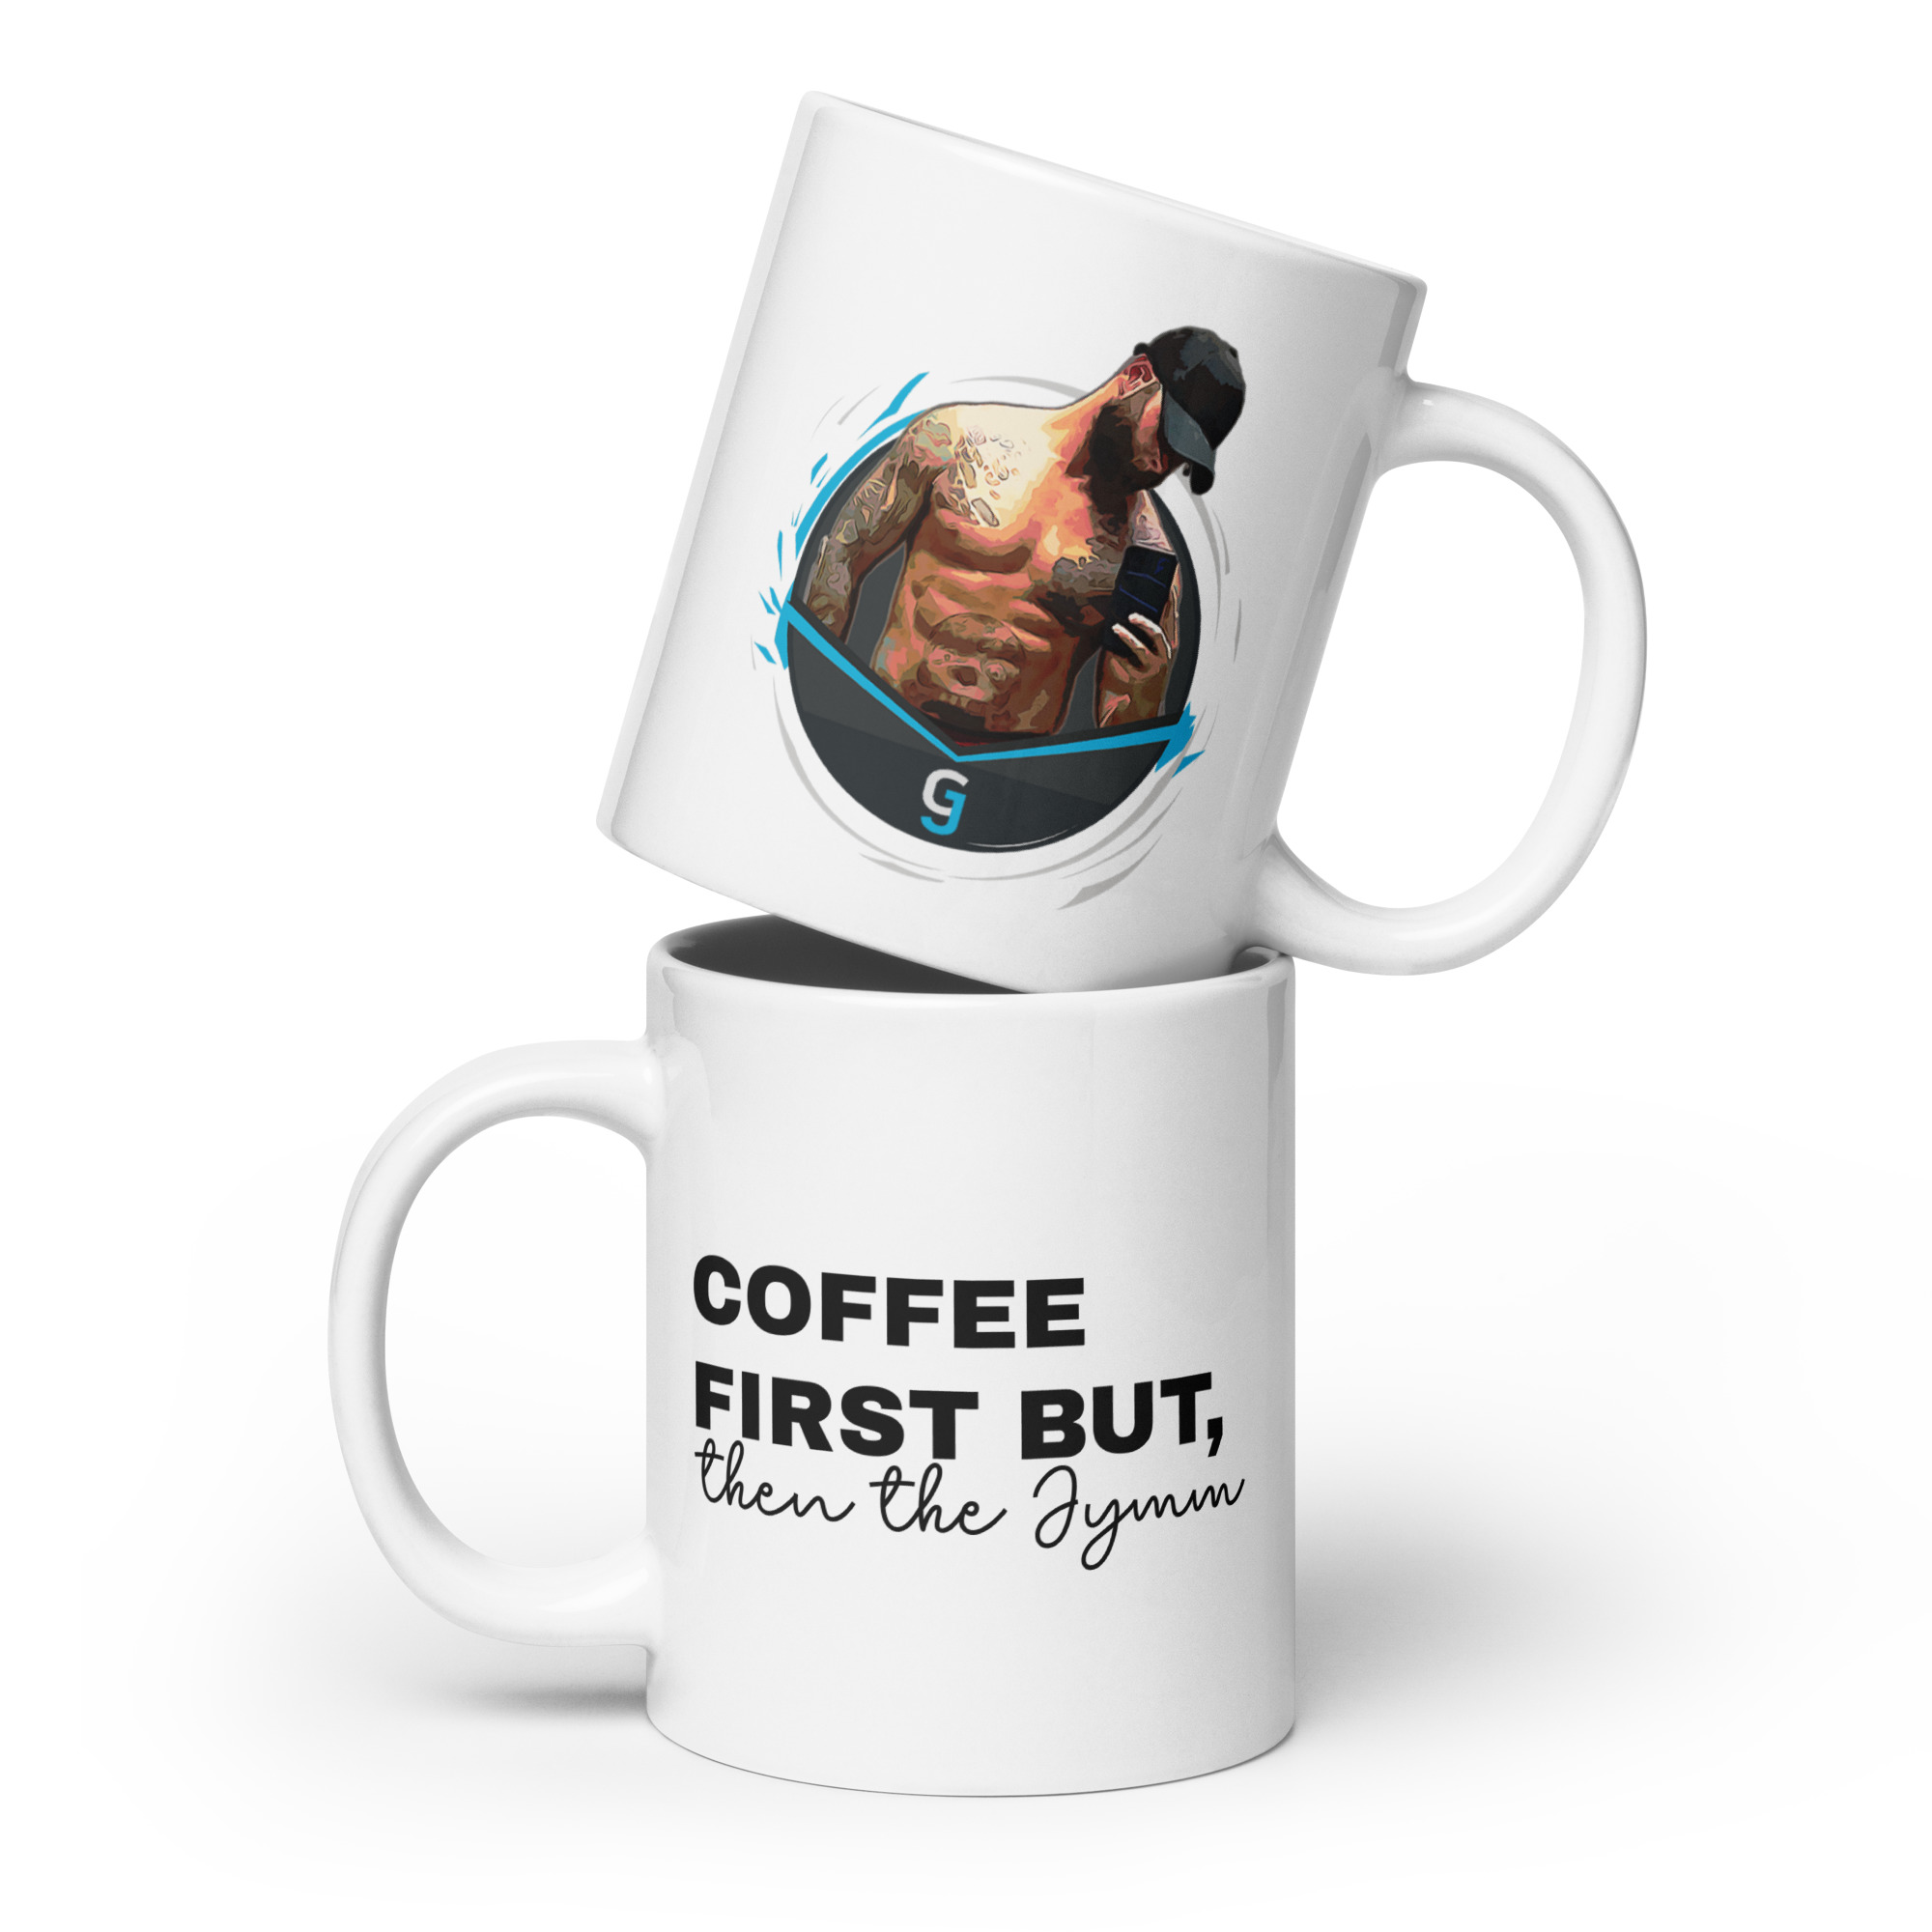 Gym Jymm coffee mug